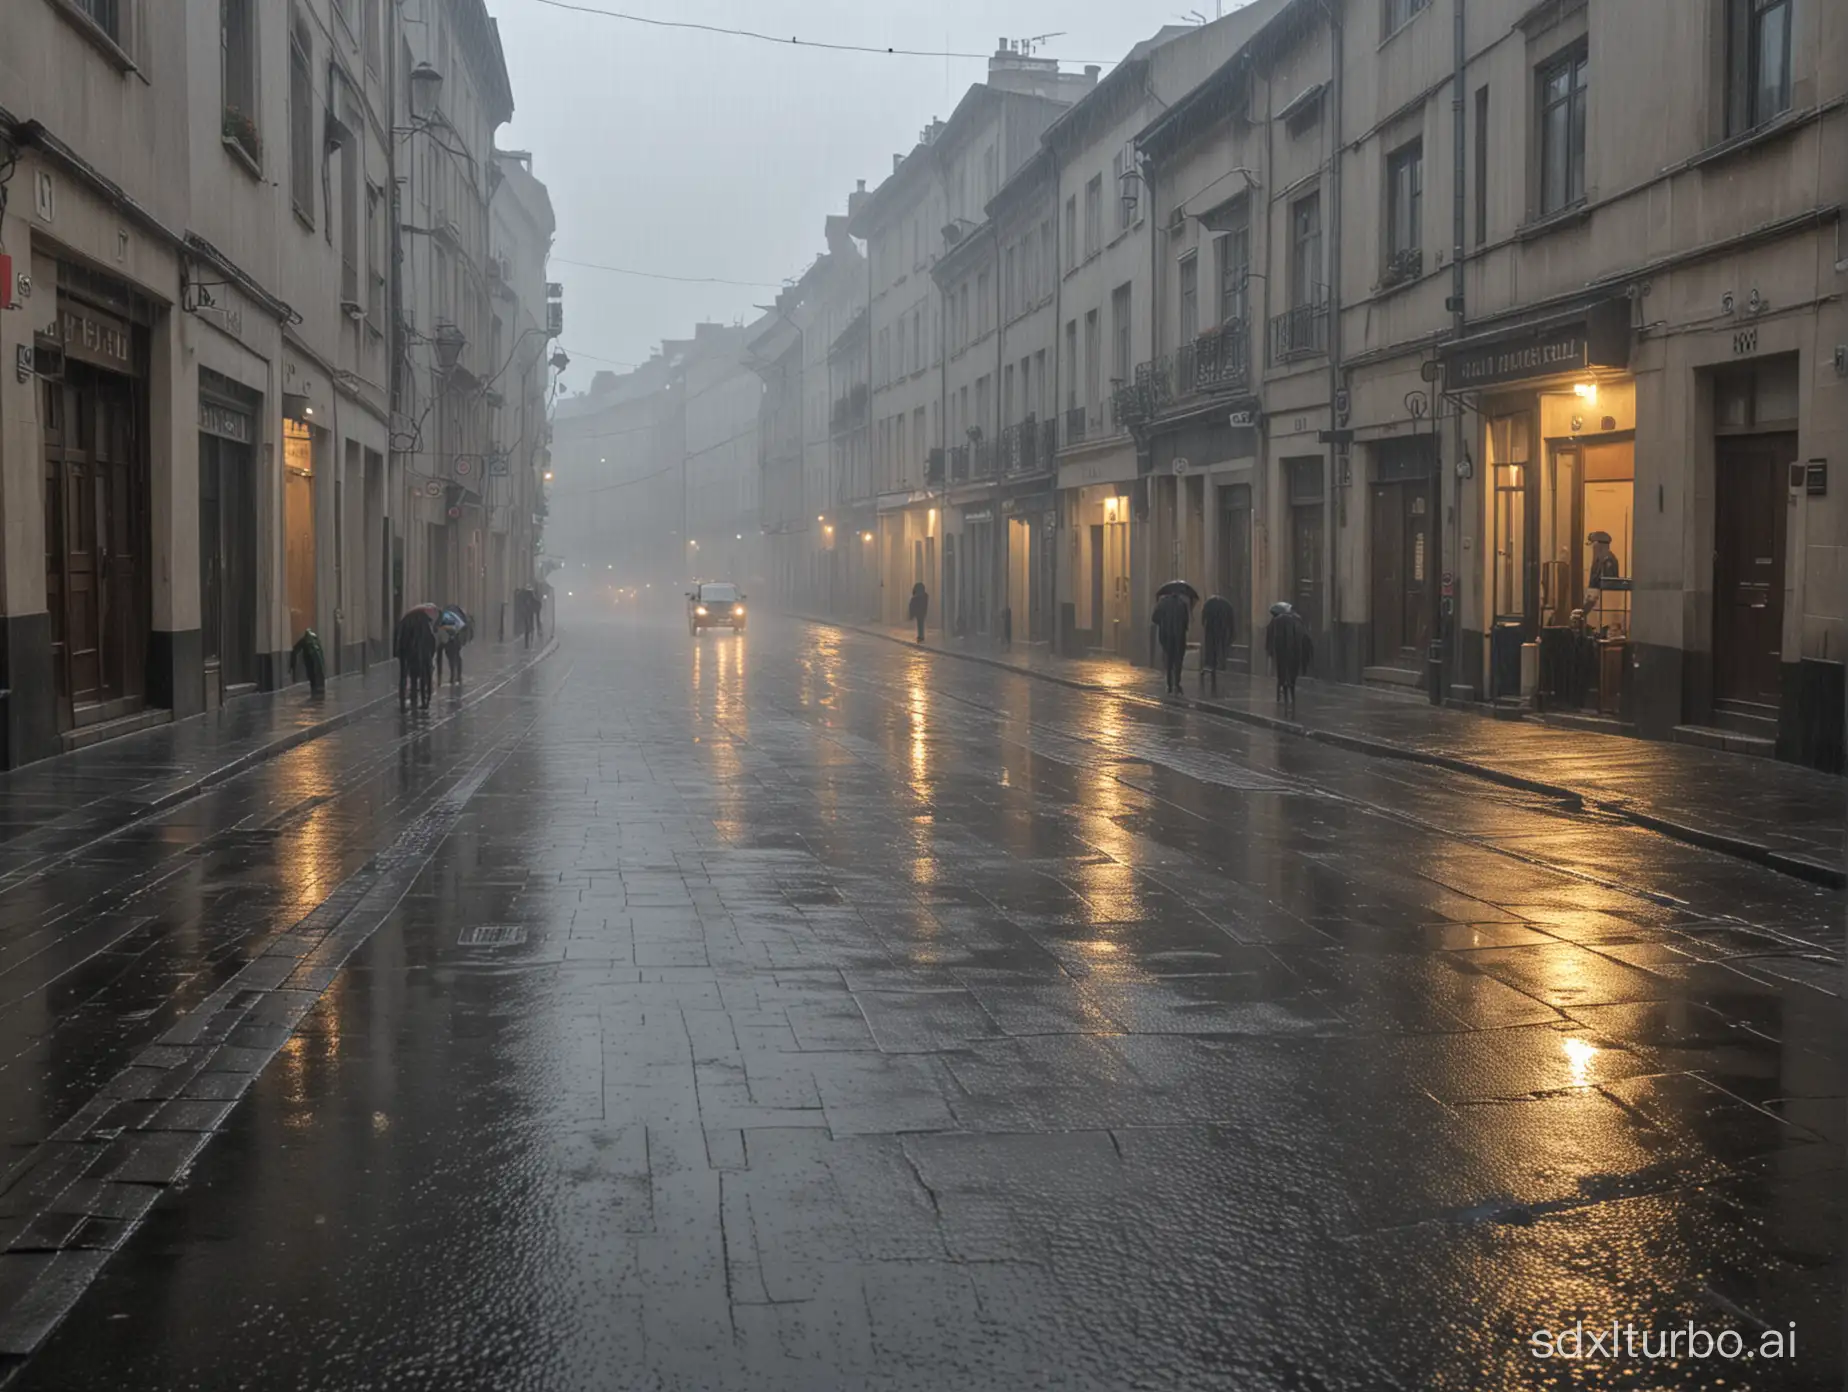 The street in the rain